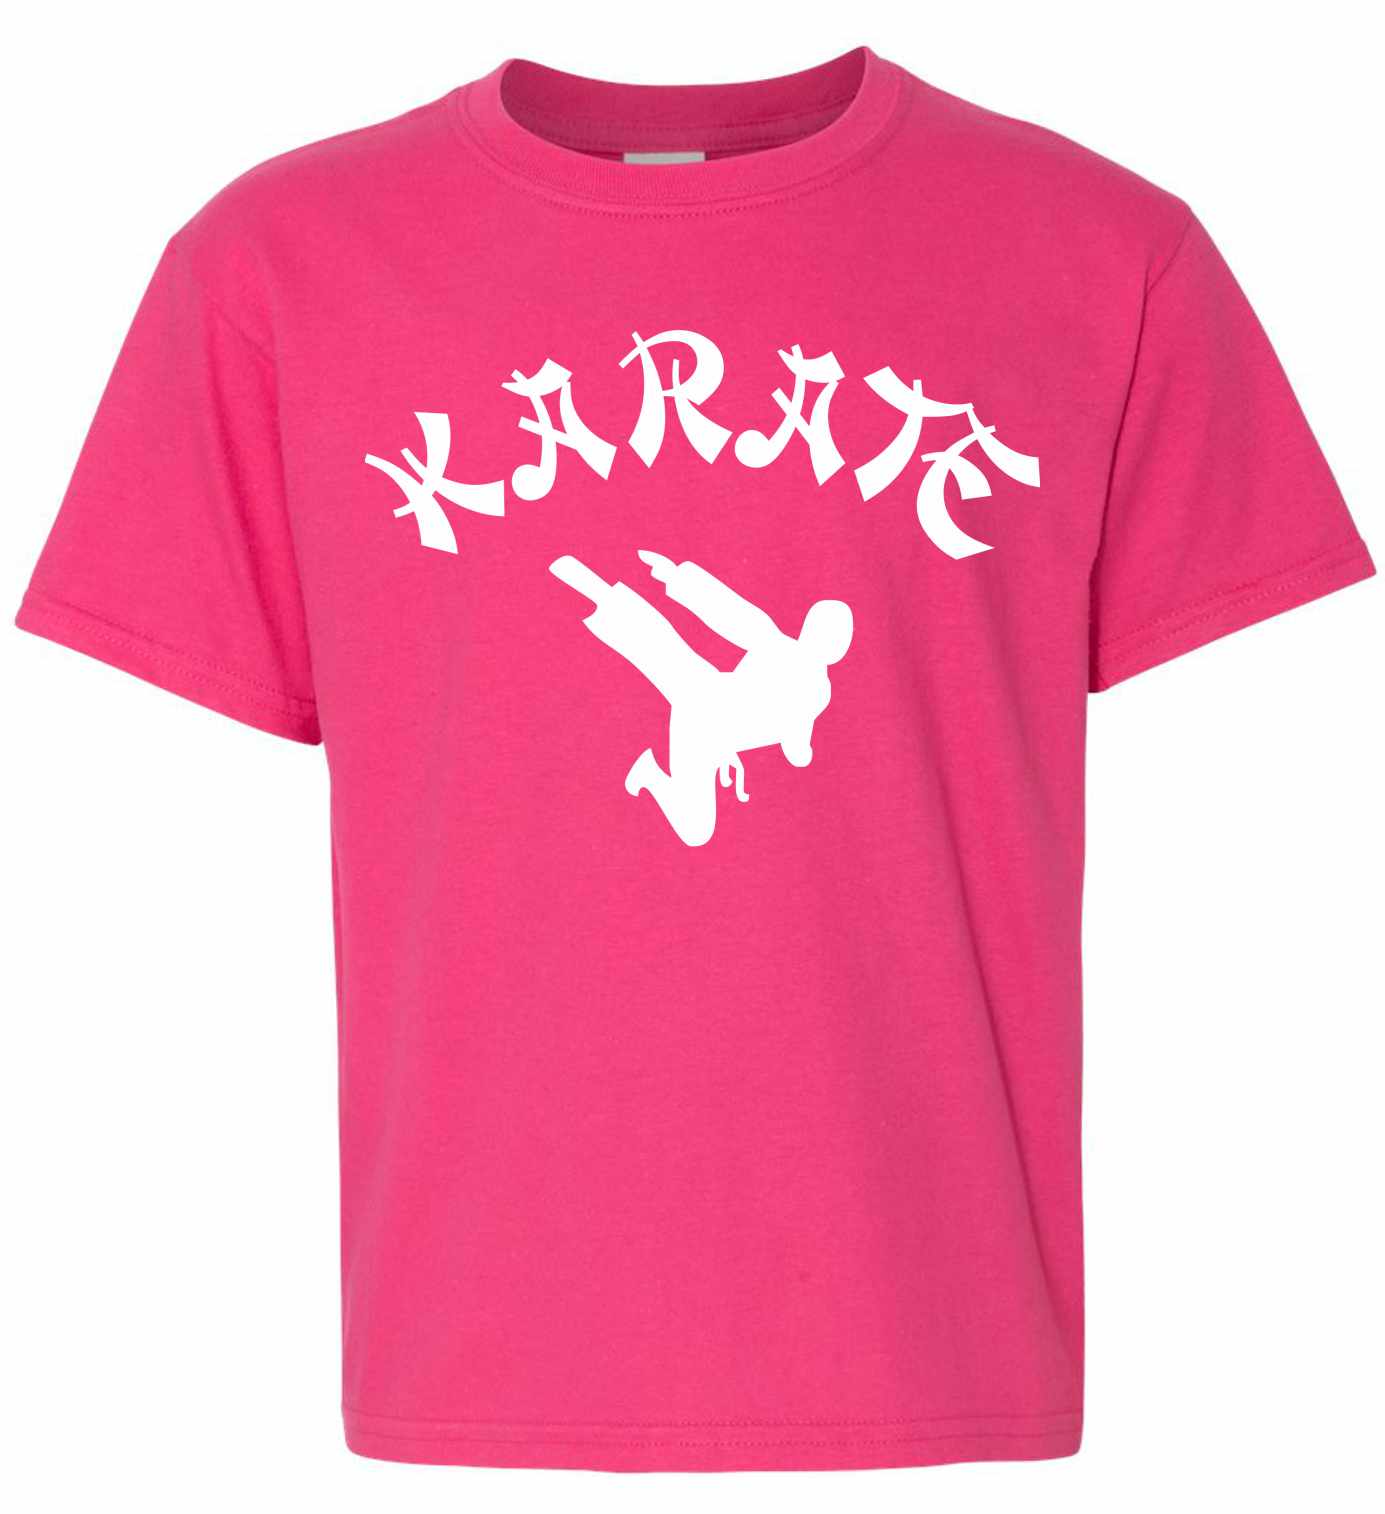 KARATE on Kids T-Shirt (#744-201)